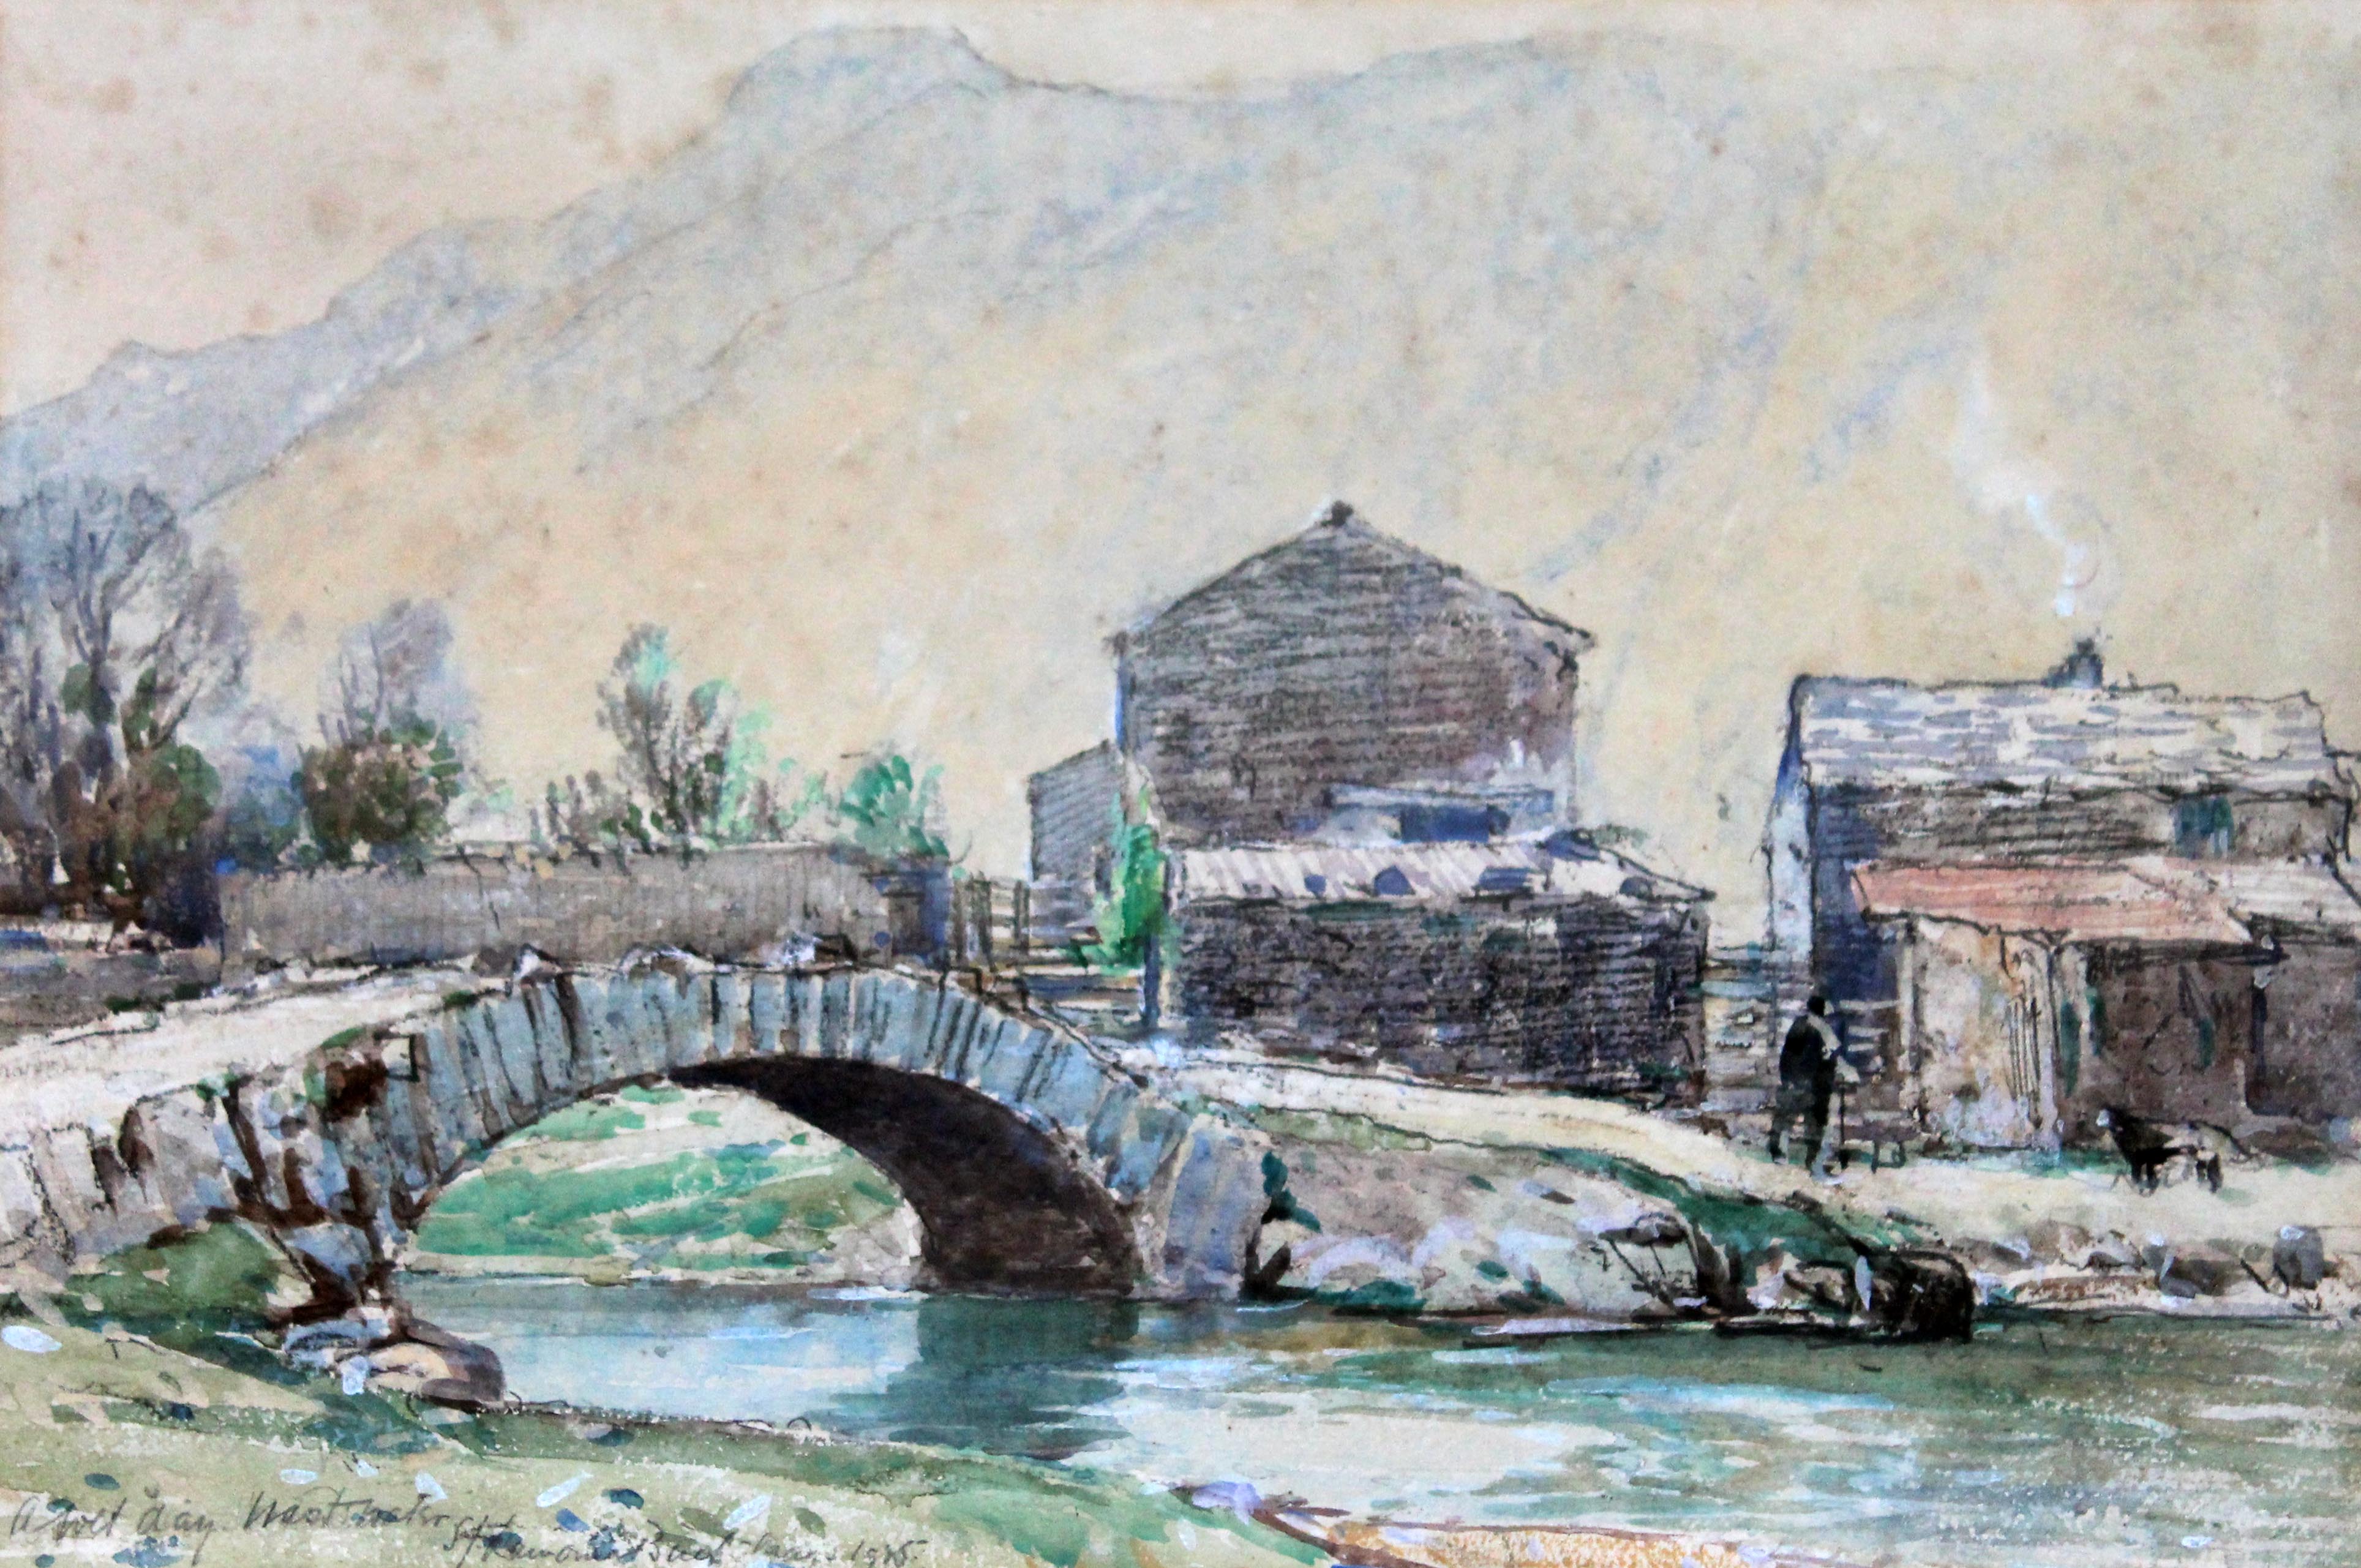 Samuel John Lamorna Birch RA (1869-1955), "A Wet Day Wastwater", watercolour, 35cm x 24.5cm, signed,